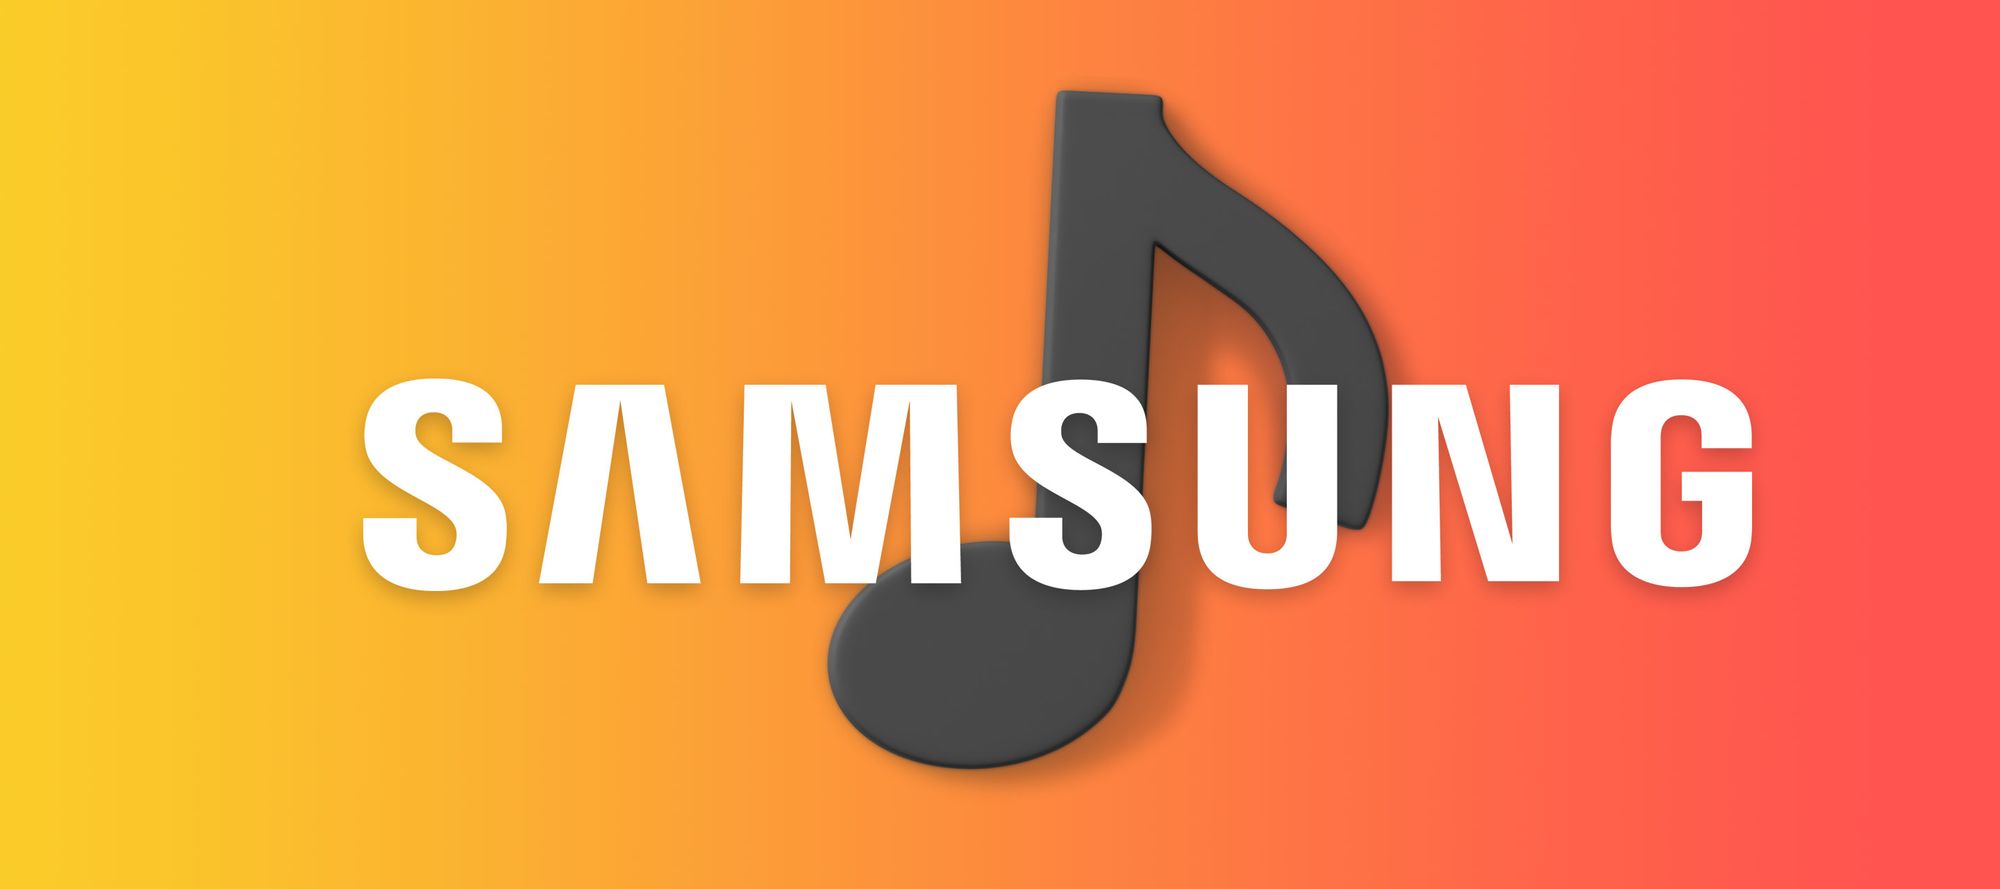 Samsung и «Over the Horizon» представили объединение джазтроники и анимации